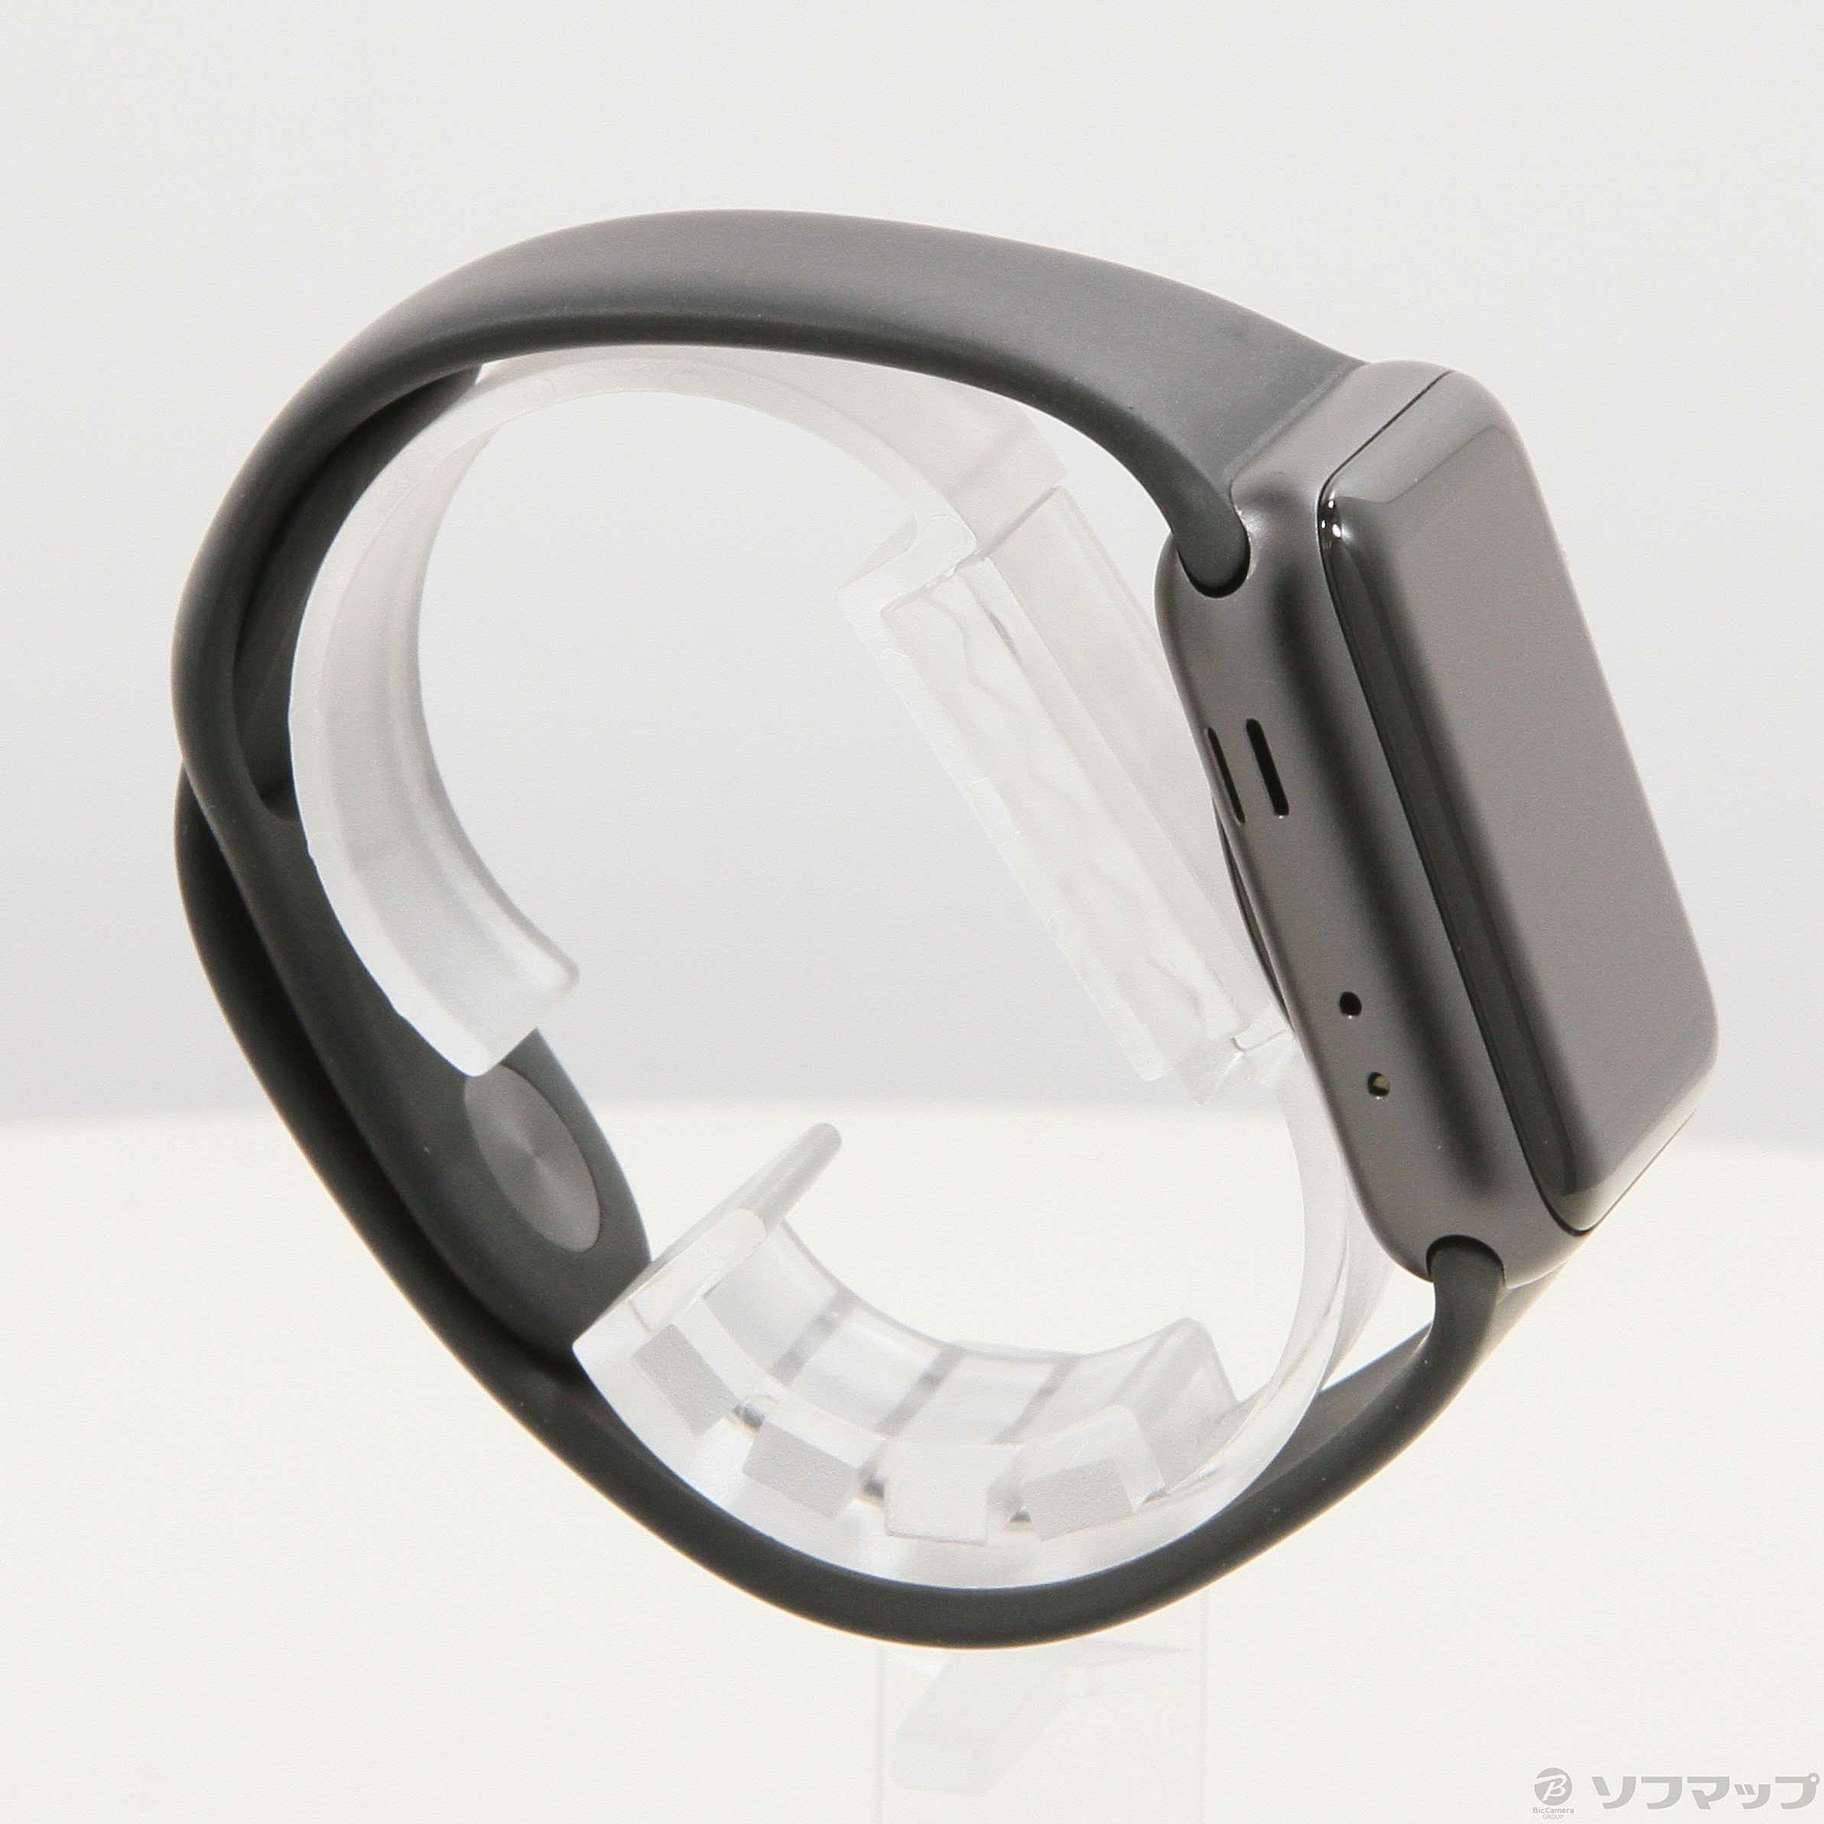 Apple Watch Series 3 GPS 38mm スペースグレイアルミニウムケース ブラックスポーツバンド